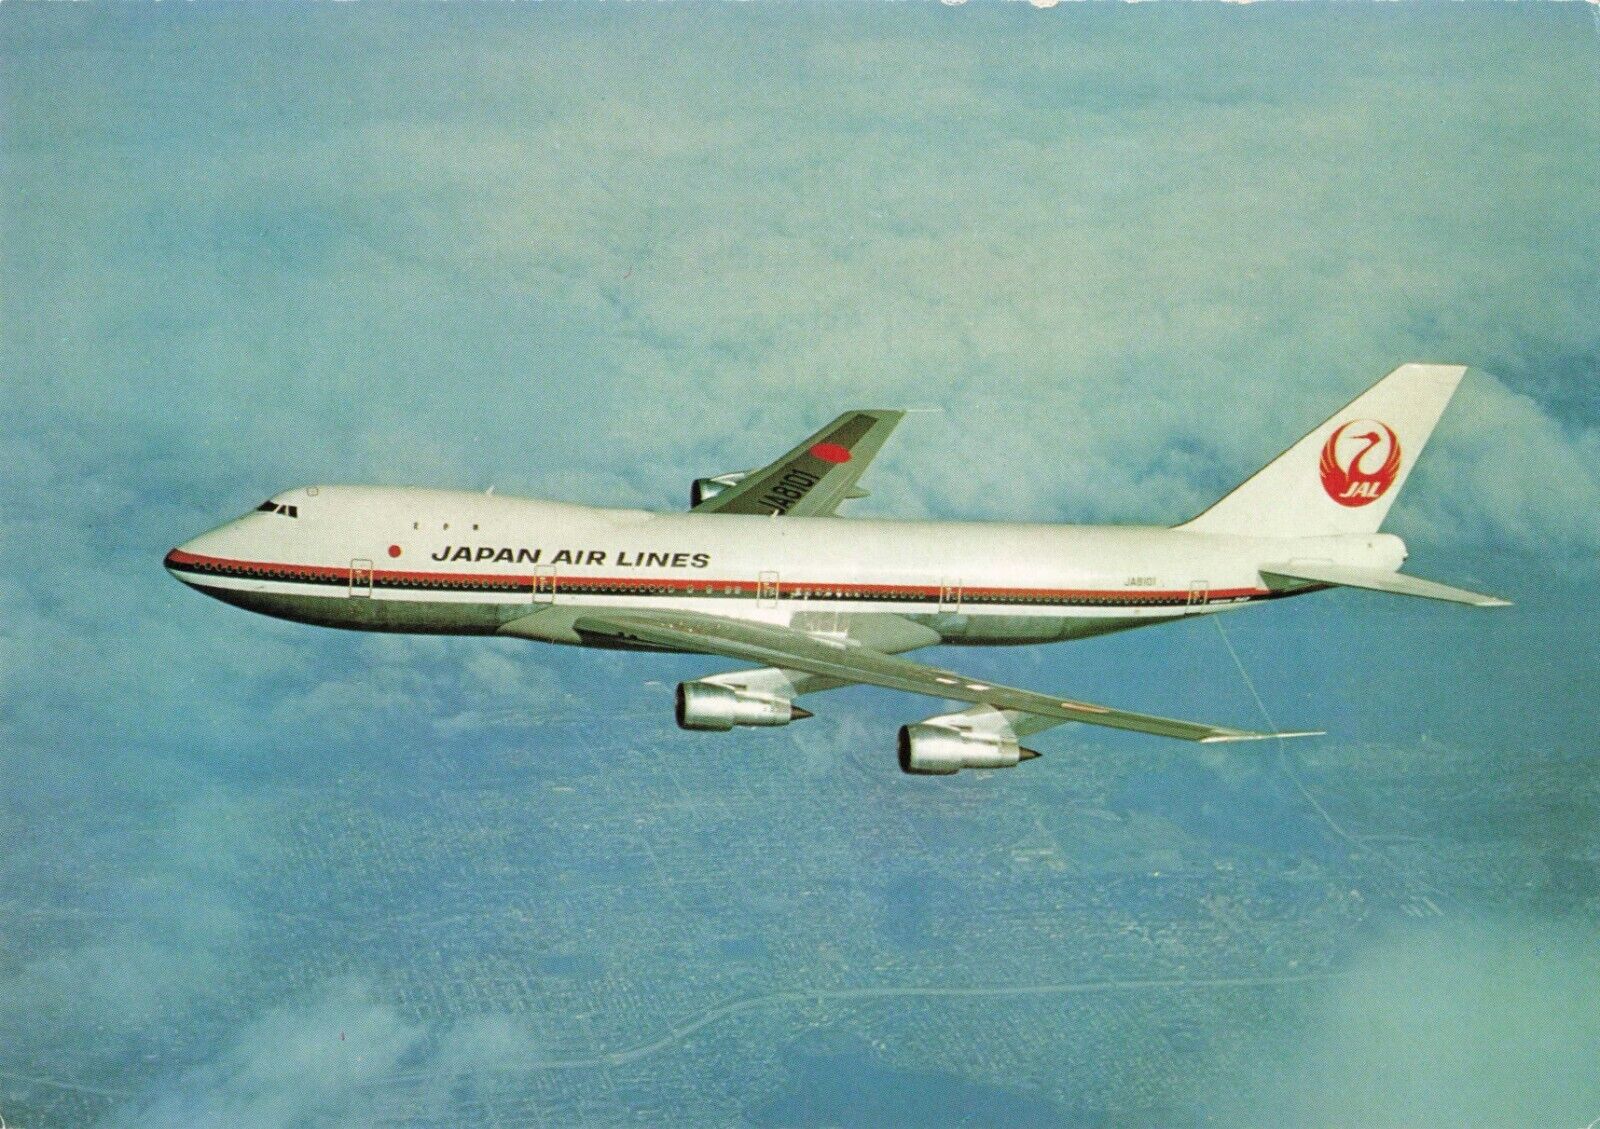 Japan Air Lines JAL Airline Issued B-747, The Garden Jet, Vintage Postcard